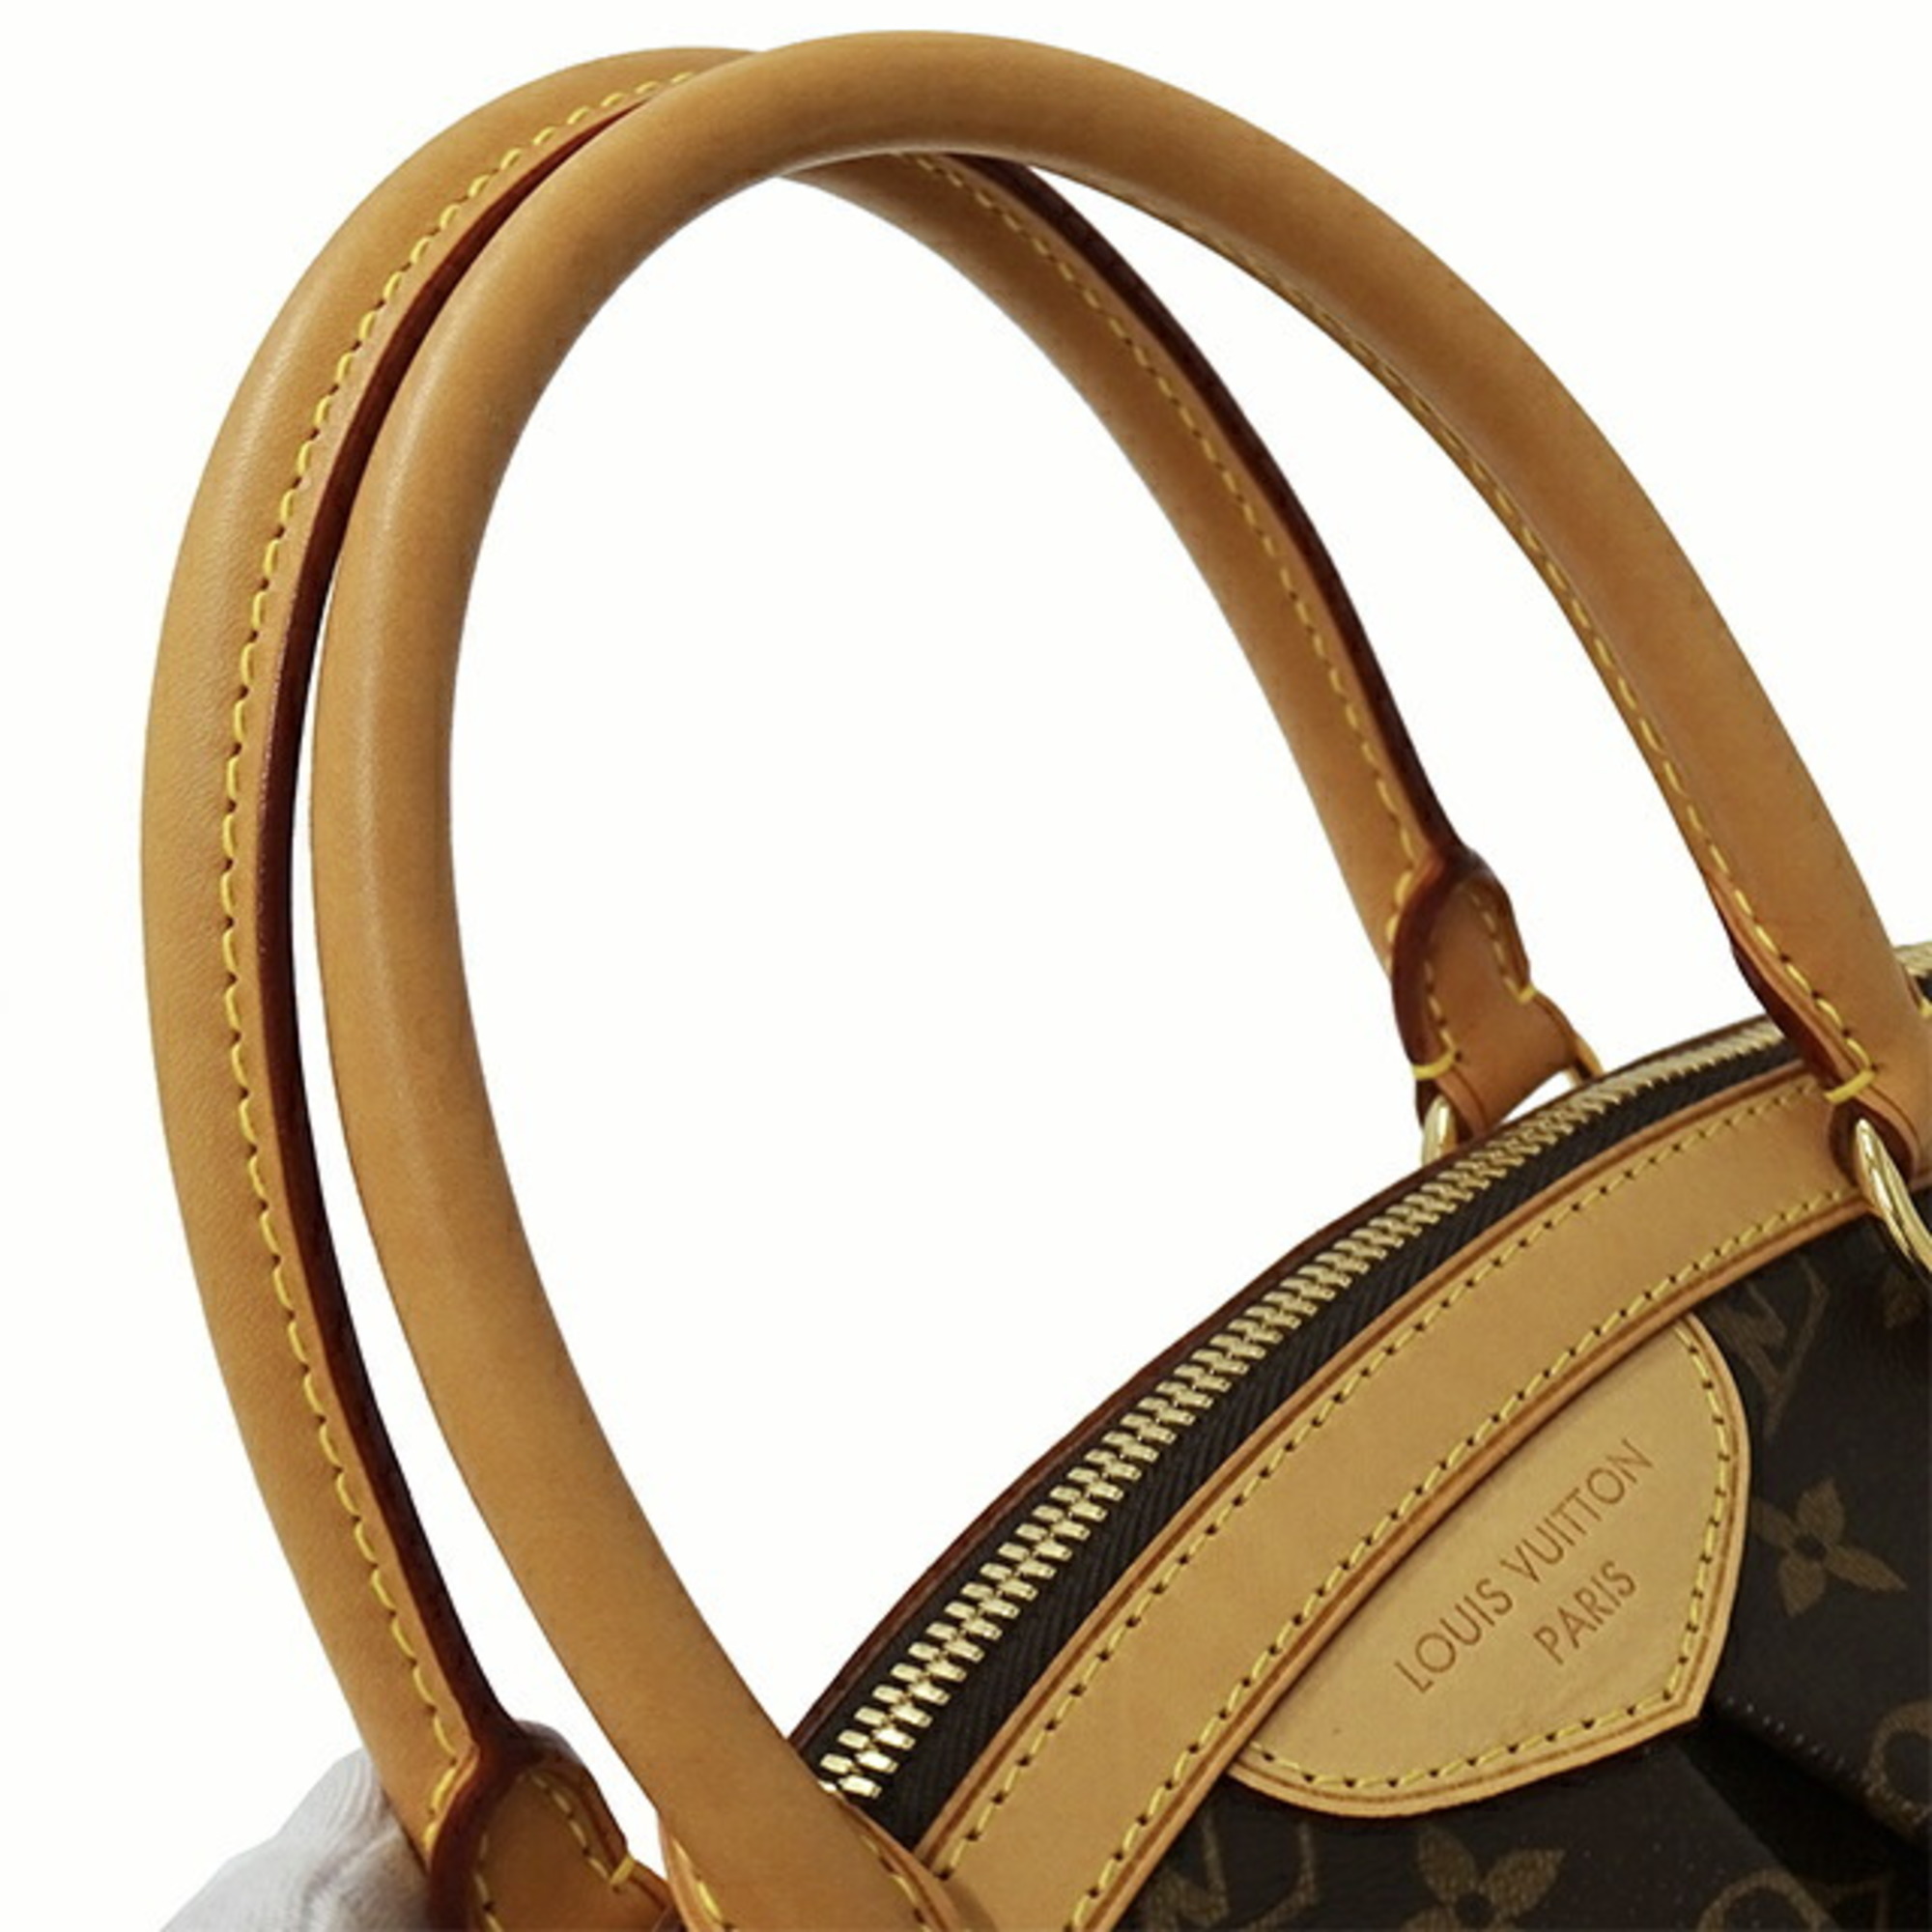 LOUIS VUITTON Bag Monogram Women's Handbag Tivoli PM Brown M40143